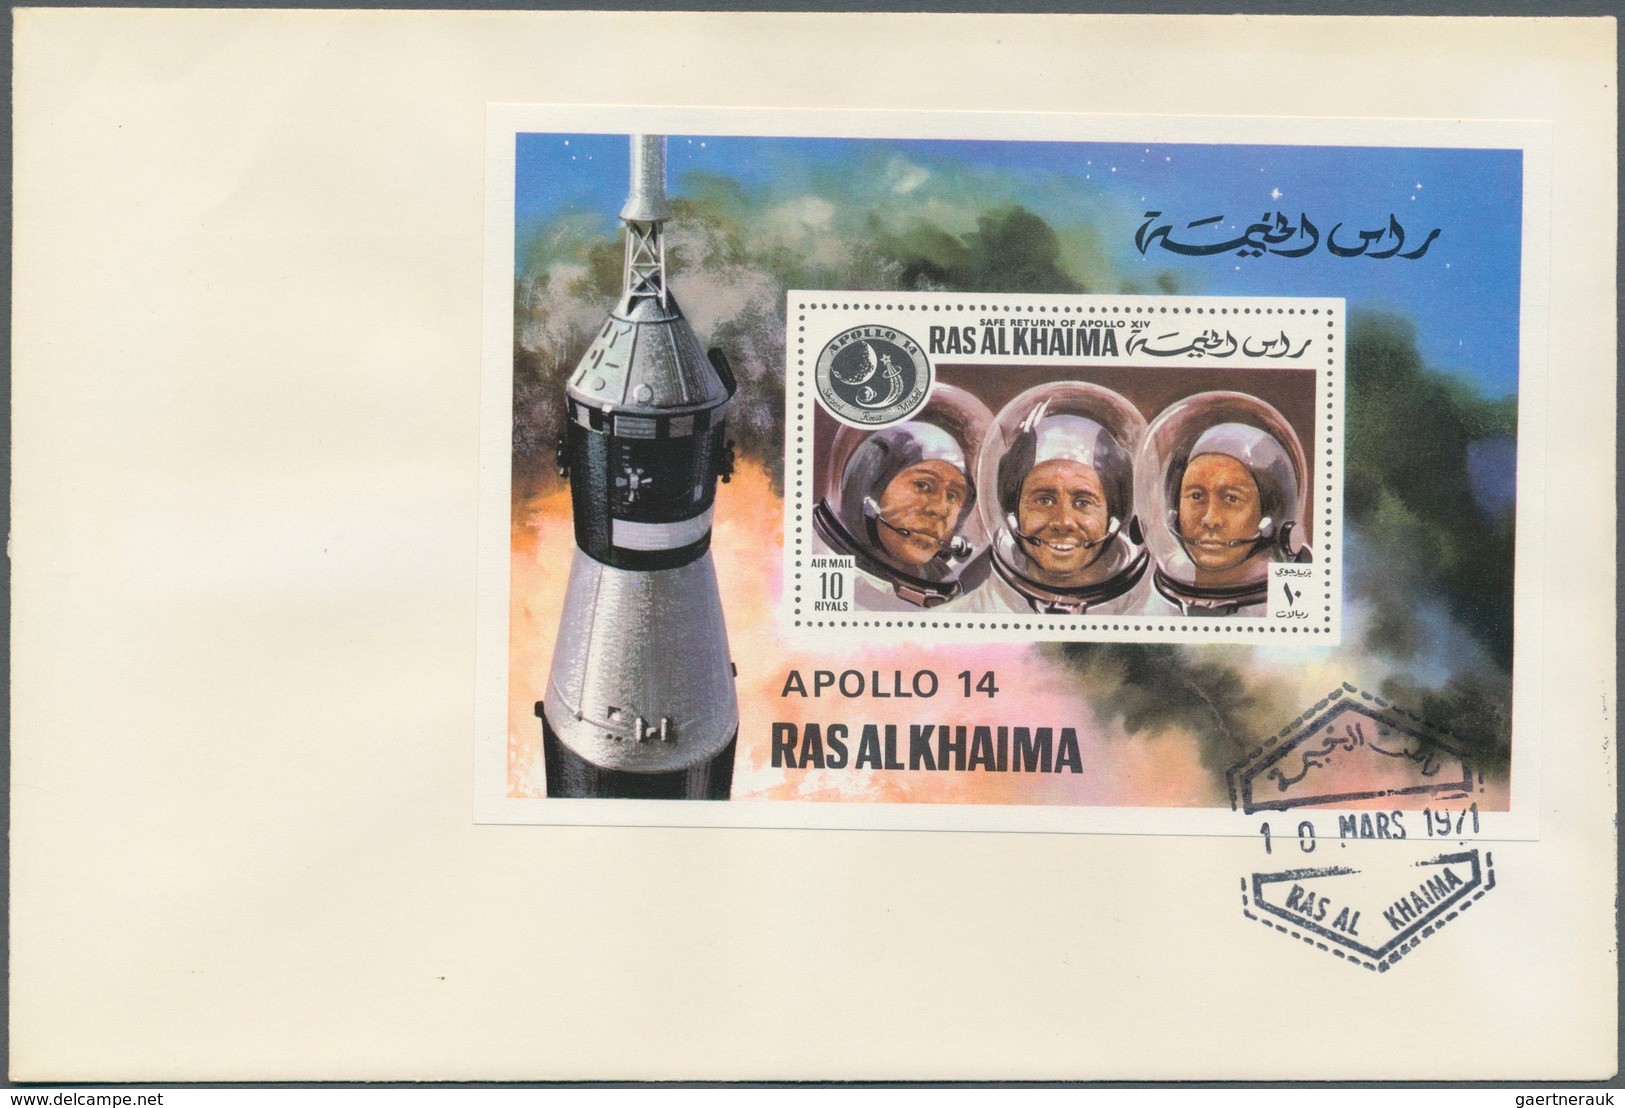 09656 Ras al Khaima: 1971, Apollo 14 Safe Return, complete set perf./imperf., two complete sets of de luxe